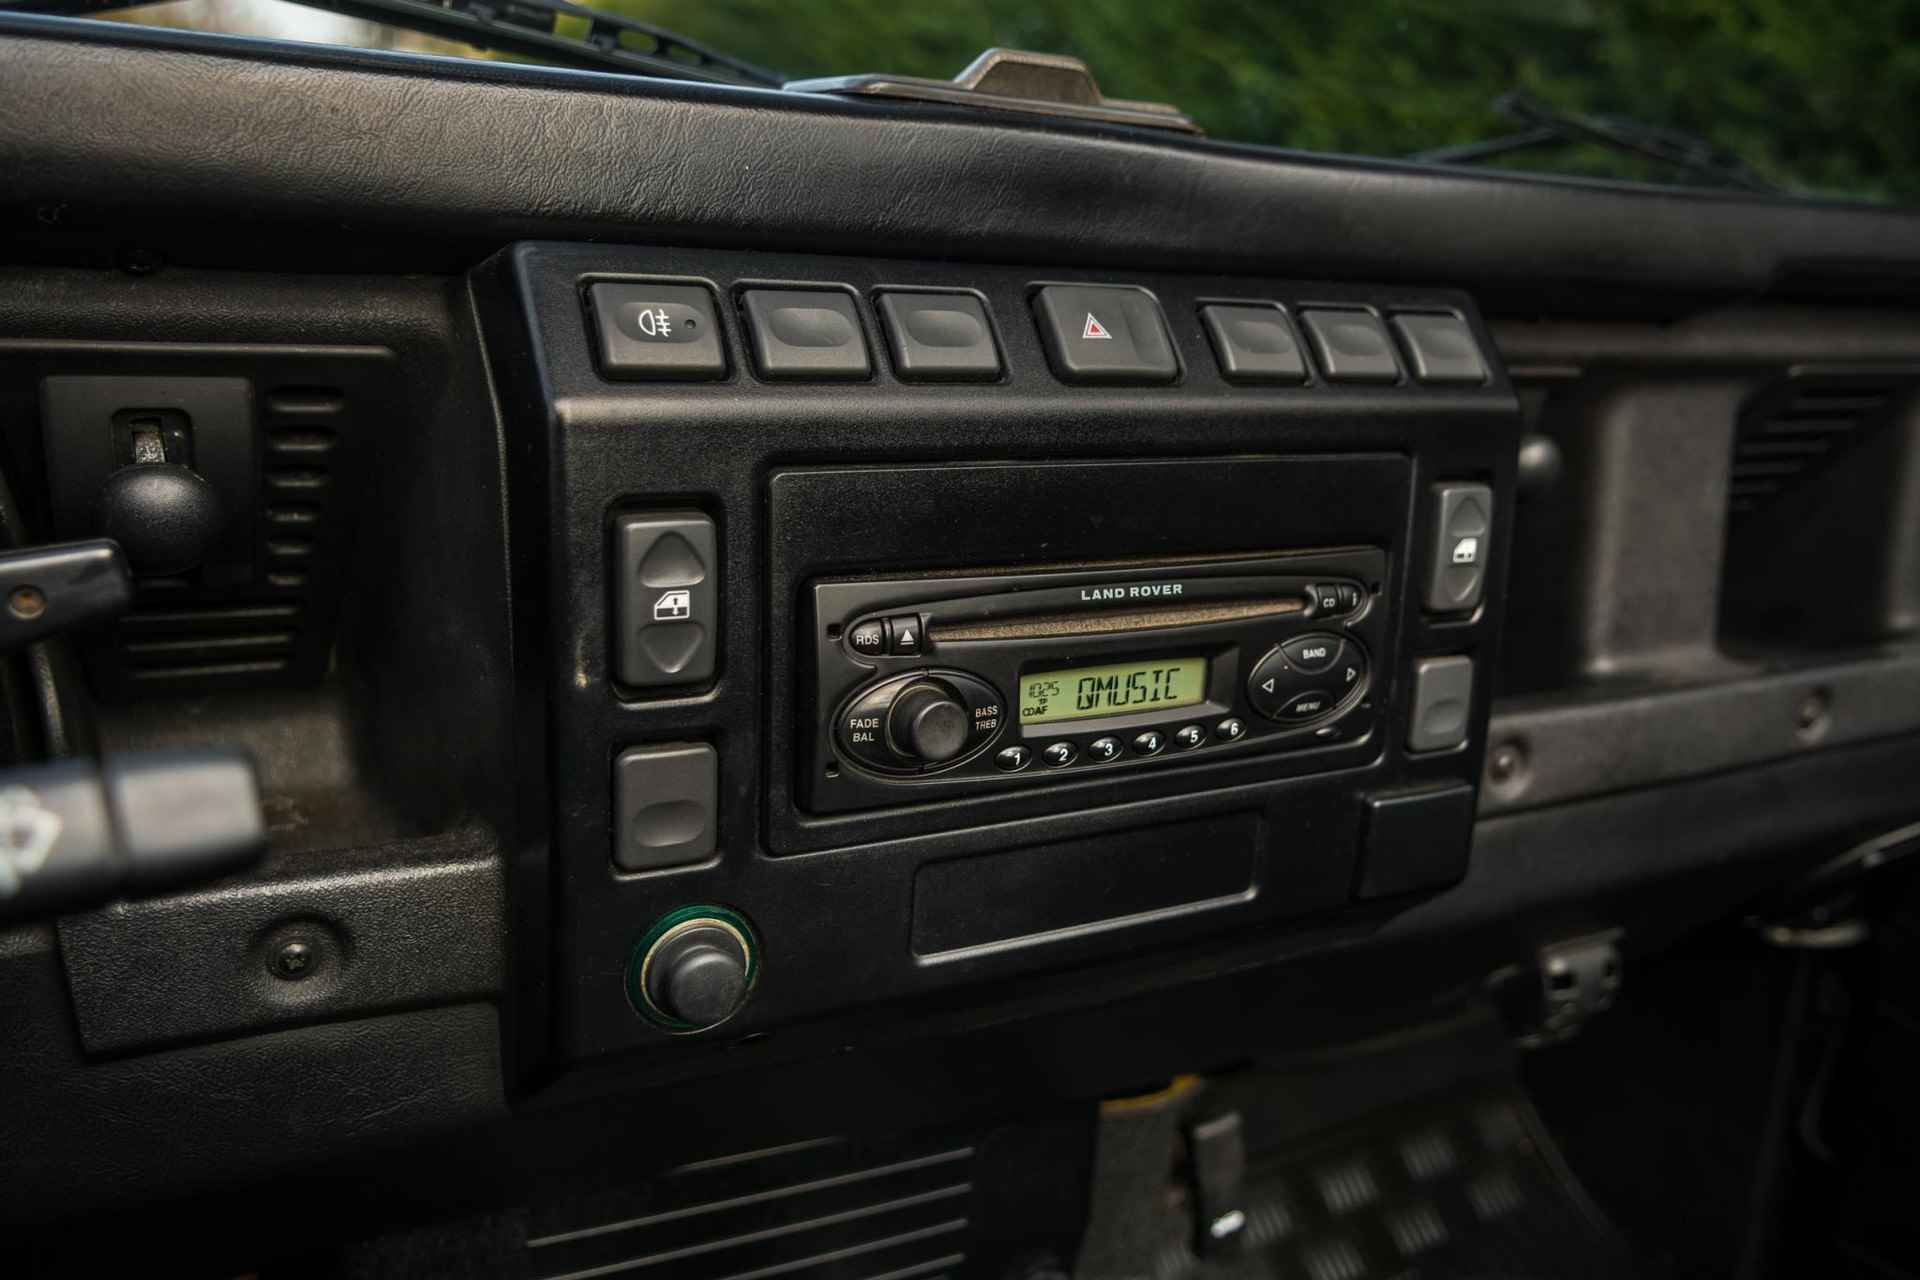 Land Rover Defender 2.5 TD5 90 Bel Air Edition. 1 of 75 - 12/22